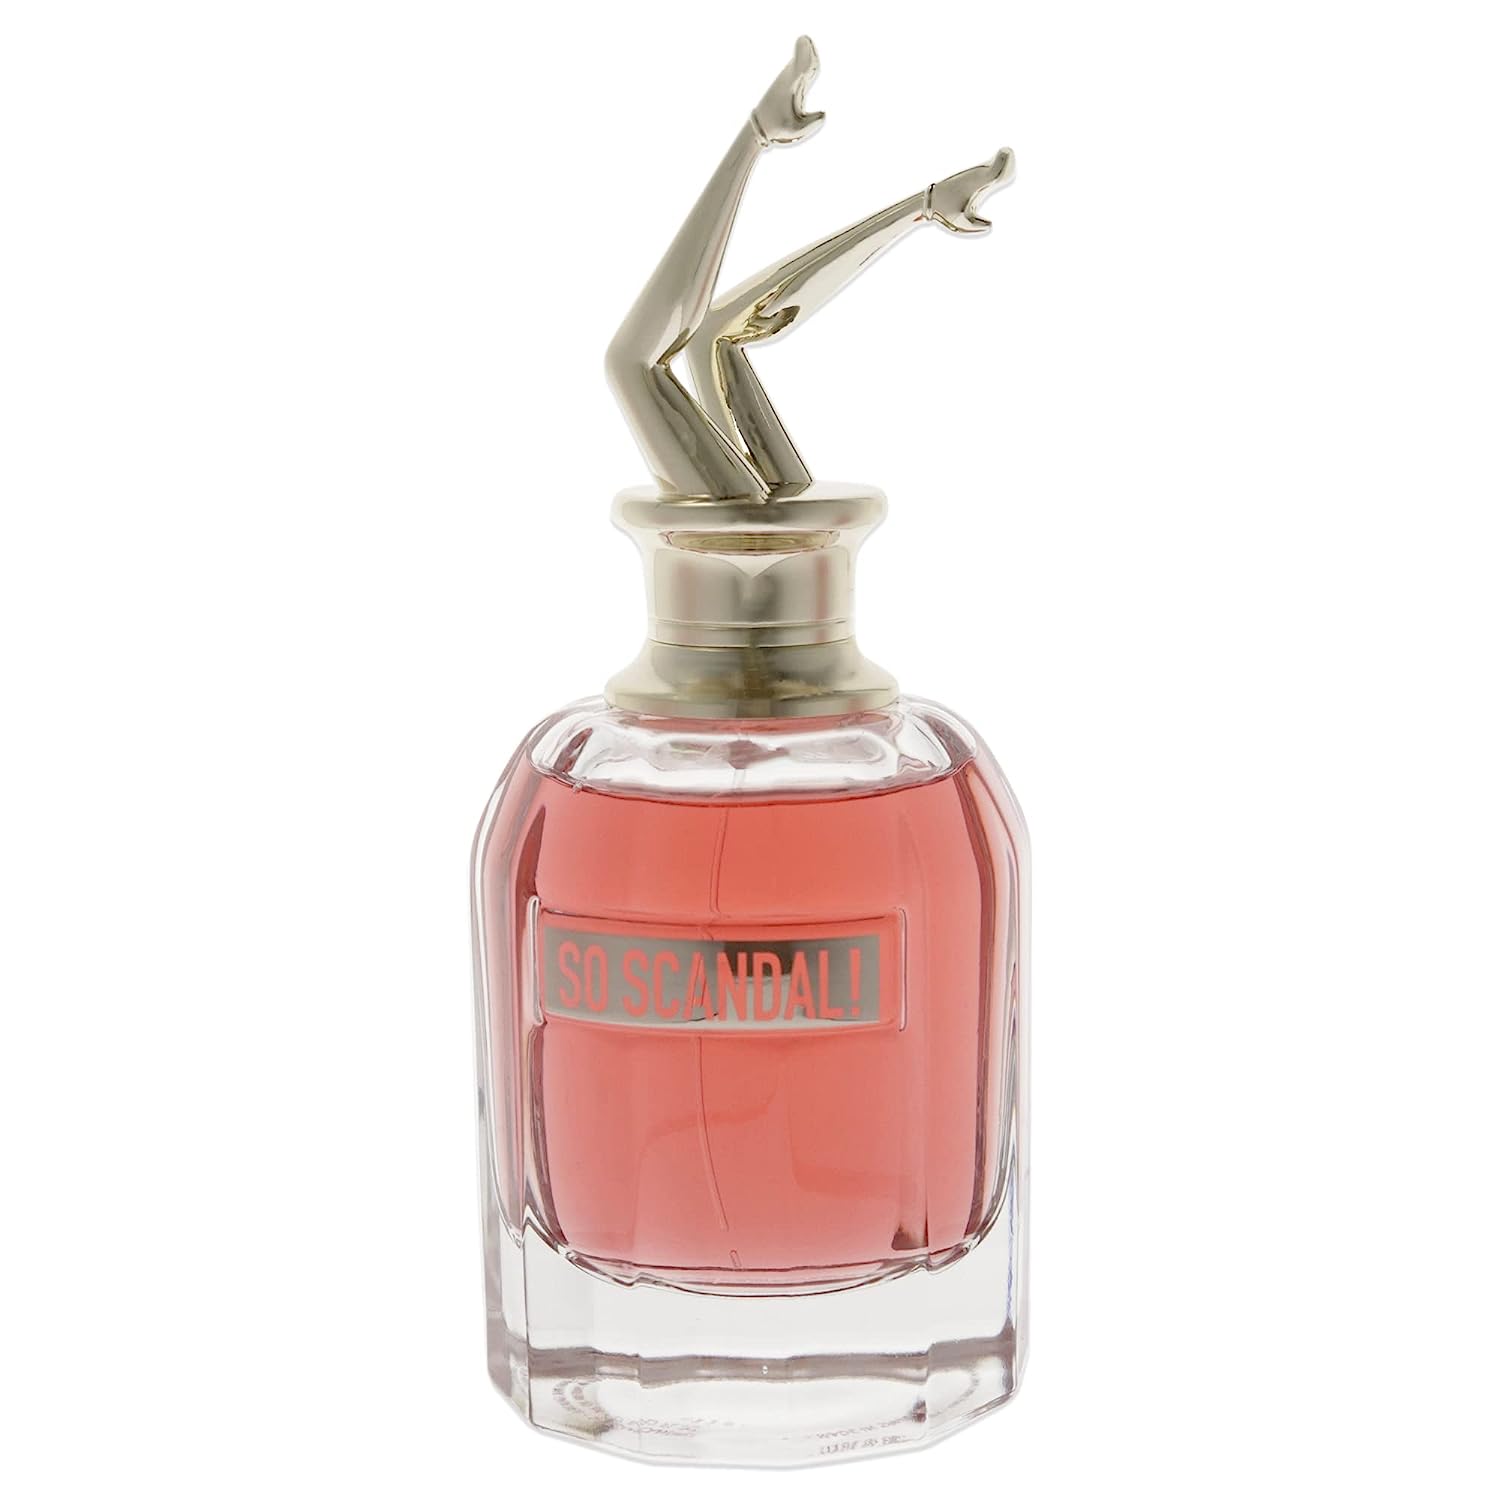 Jean Paul Gaultier Ladies So Scandal Eau de Parfum (80 ml) Beautiful